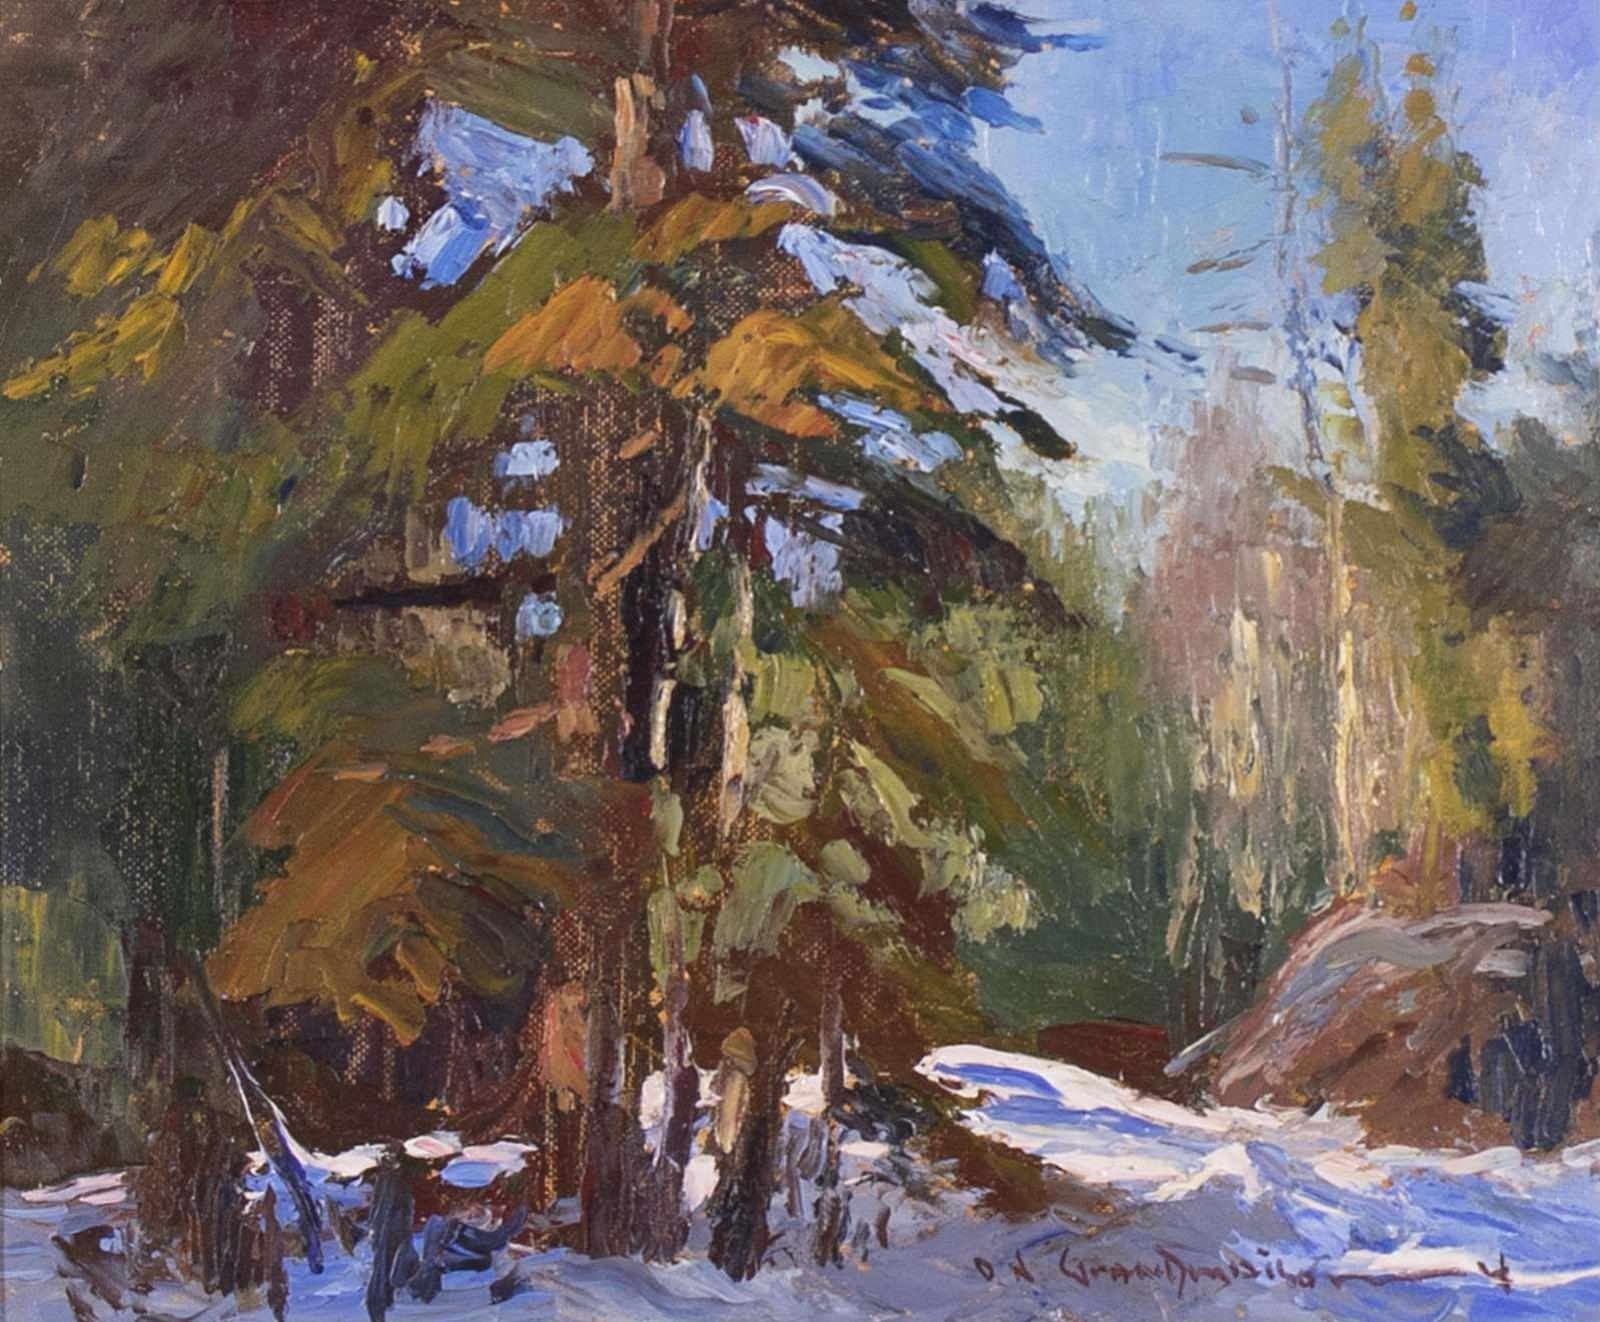 Orestes Nicholas (Rick) Grandmaison (1932-1985) - Winter Sunlight Near Banff; 1966